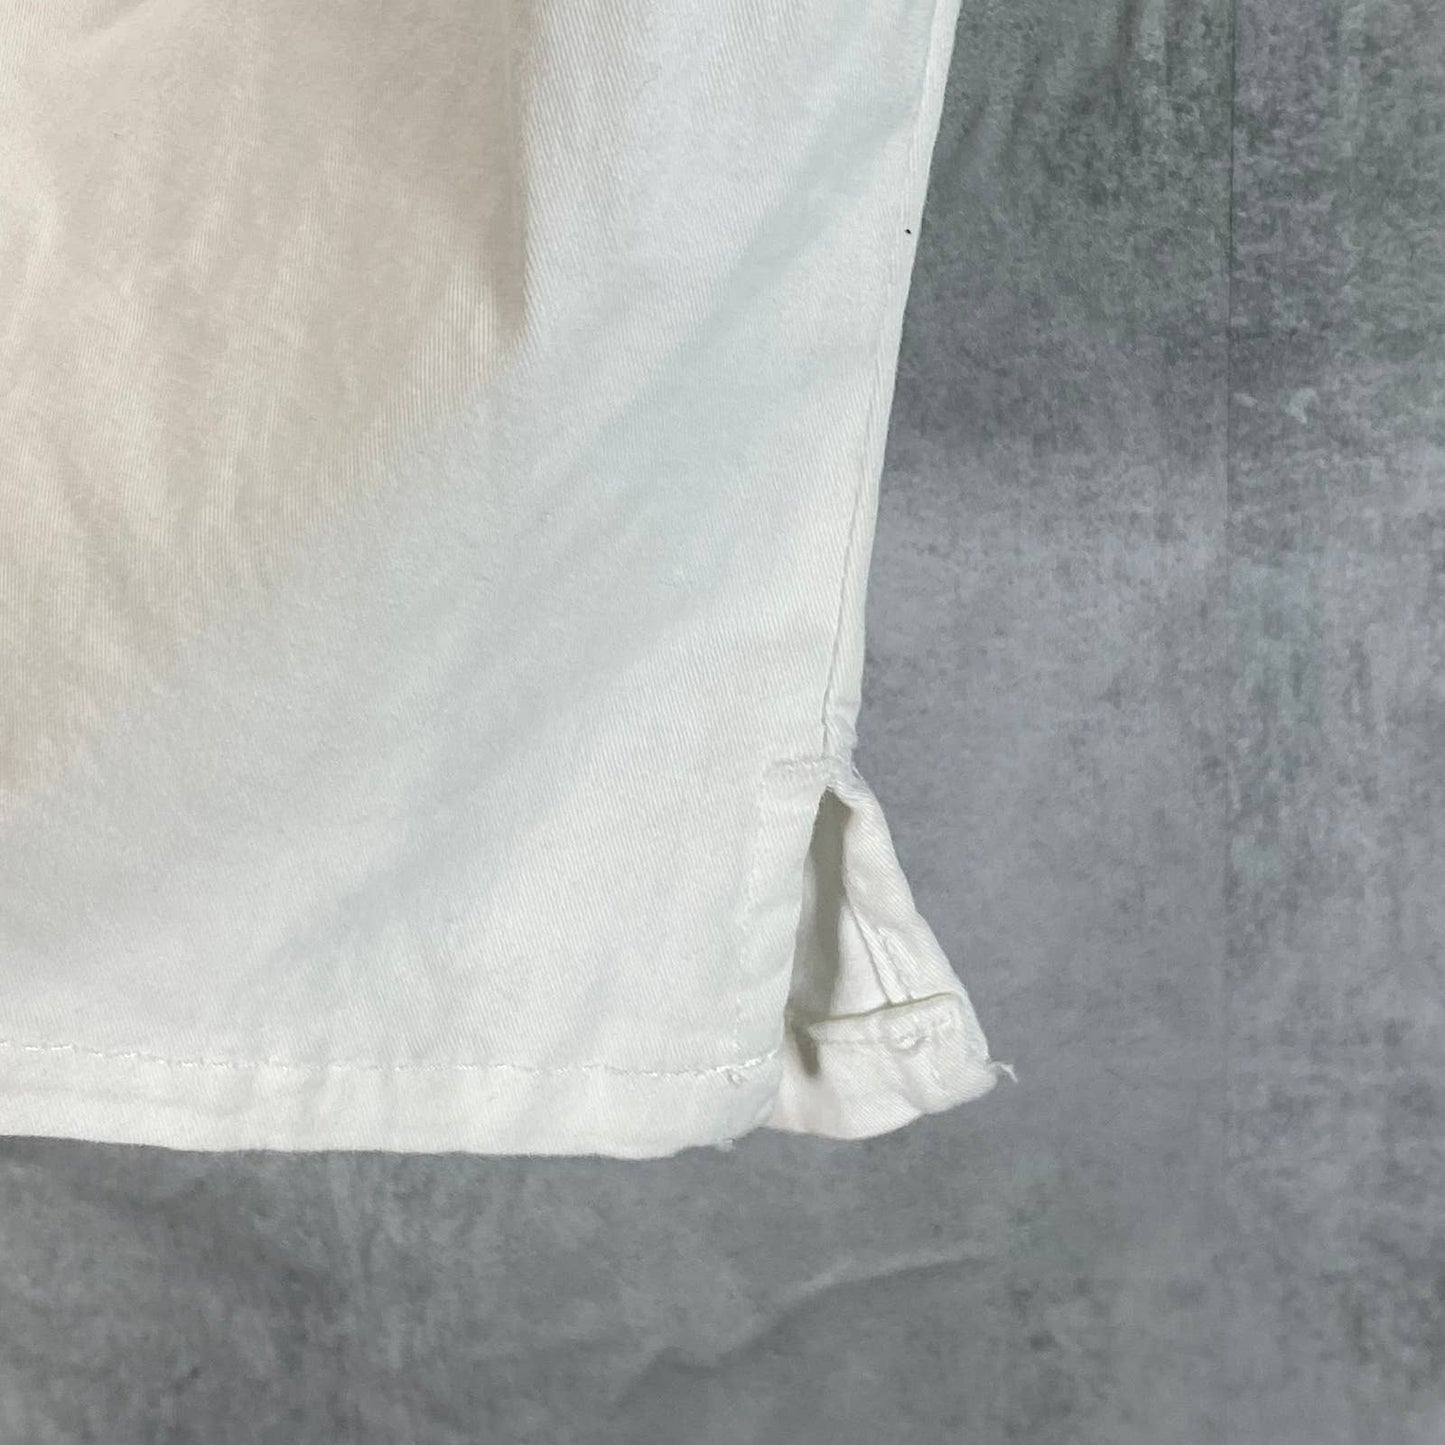 KAREN SCOTT Women's Bright White Mid-Rise Comfort-Waist Capri Pants SZ 18